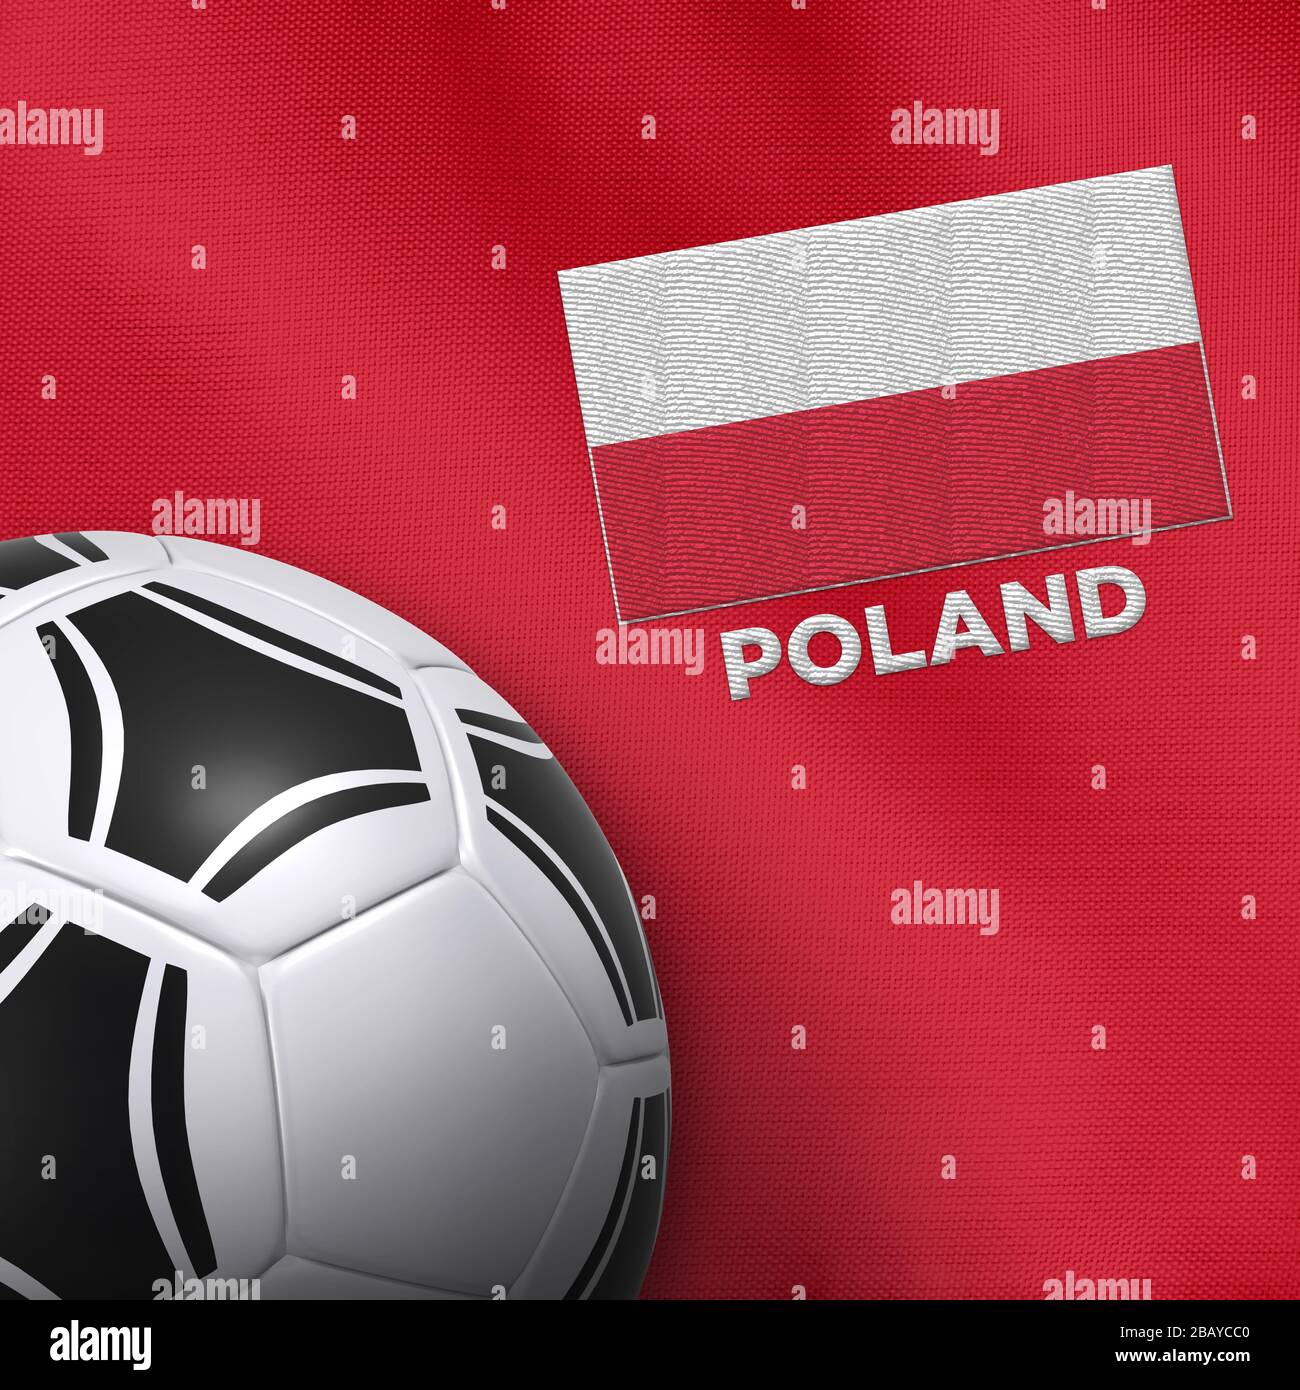 Ballon de football (football) et maillot de l'équipe nationale de Pologne  Photo Stock - Alamy